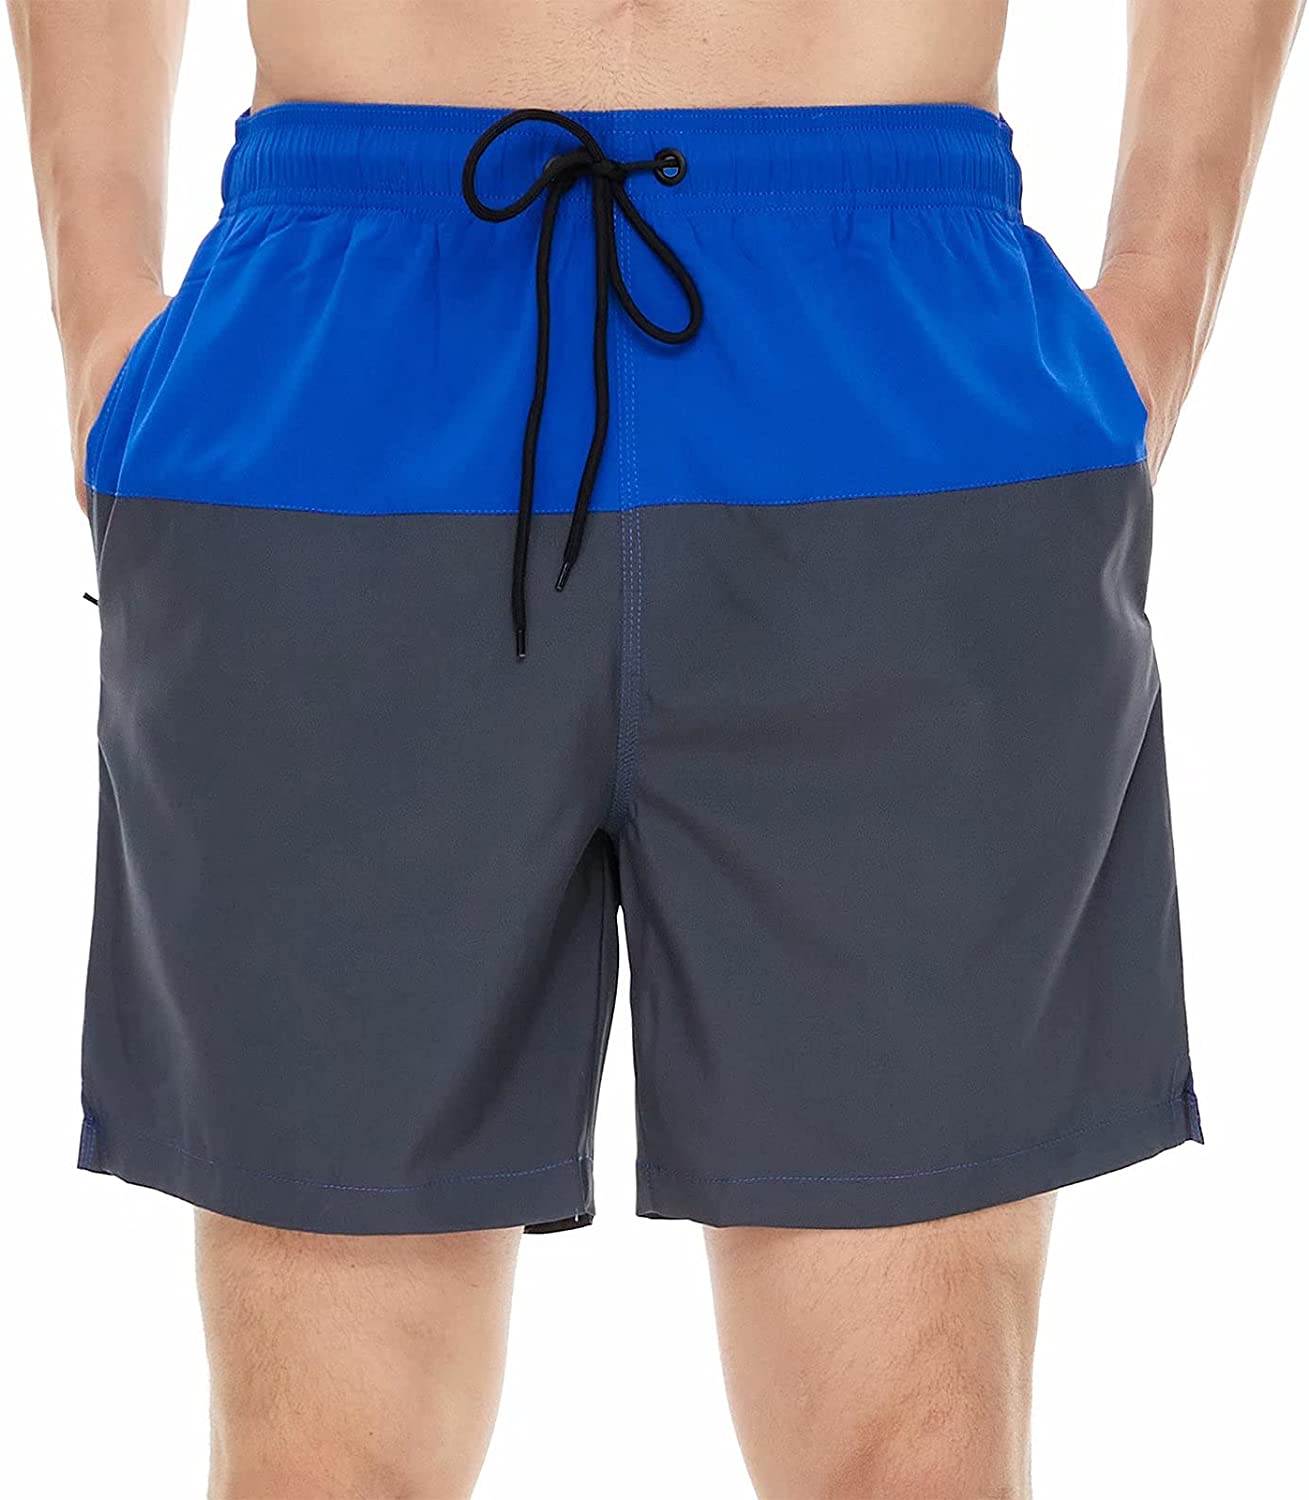 Tyhengta Men's Swim Trunks Quick Dry Beach Shorts with Zipper Pockets and  Mesh L